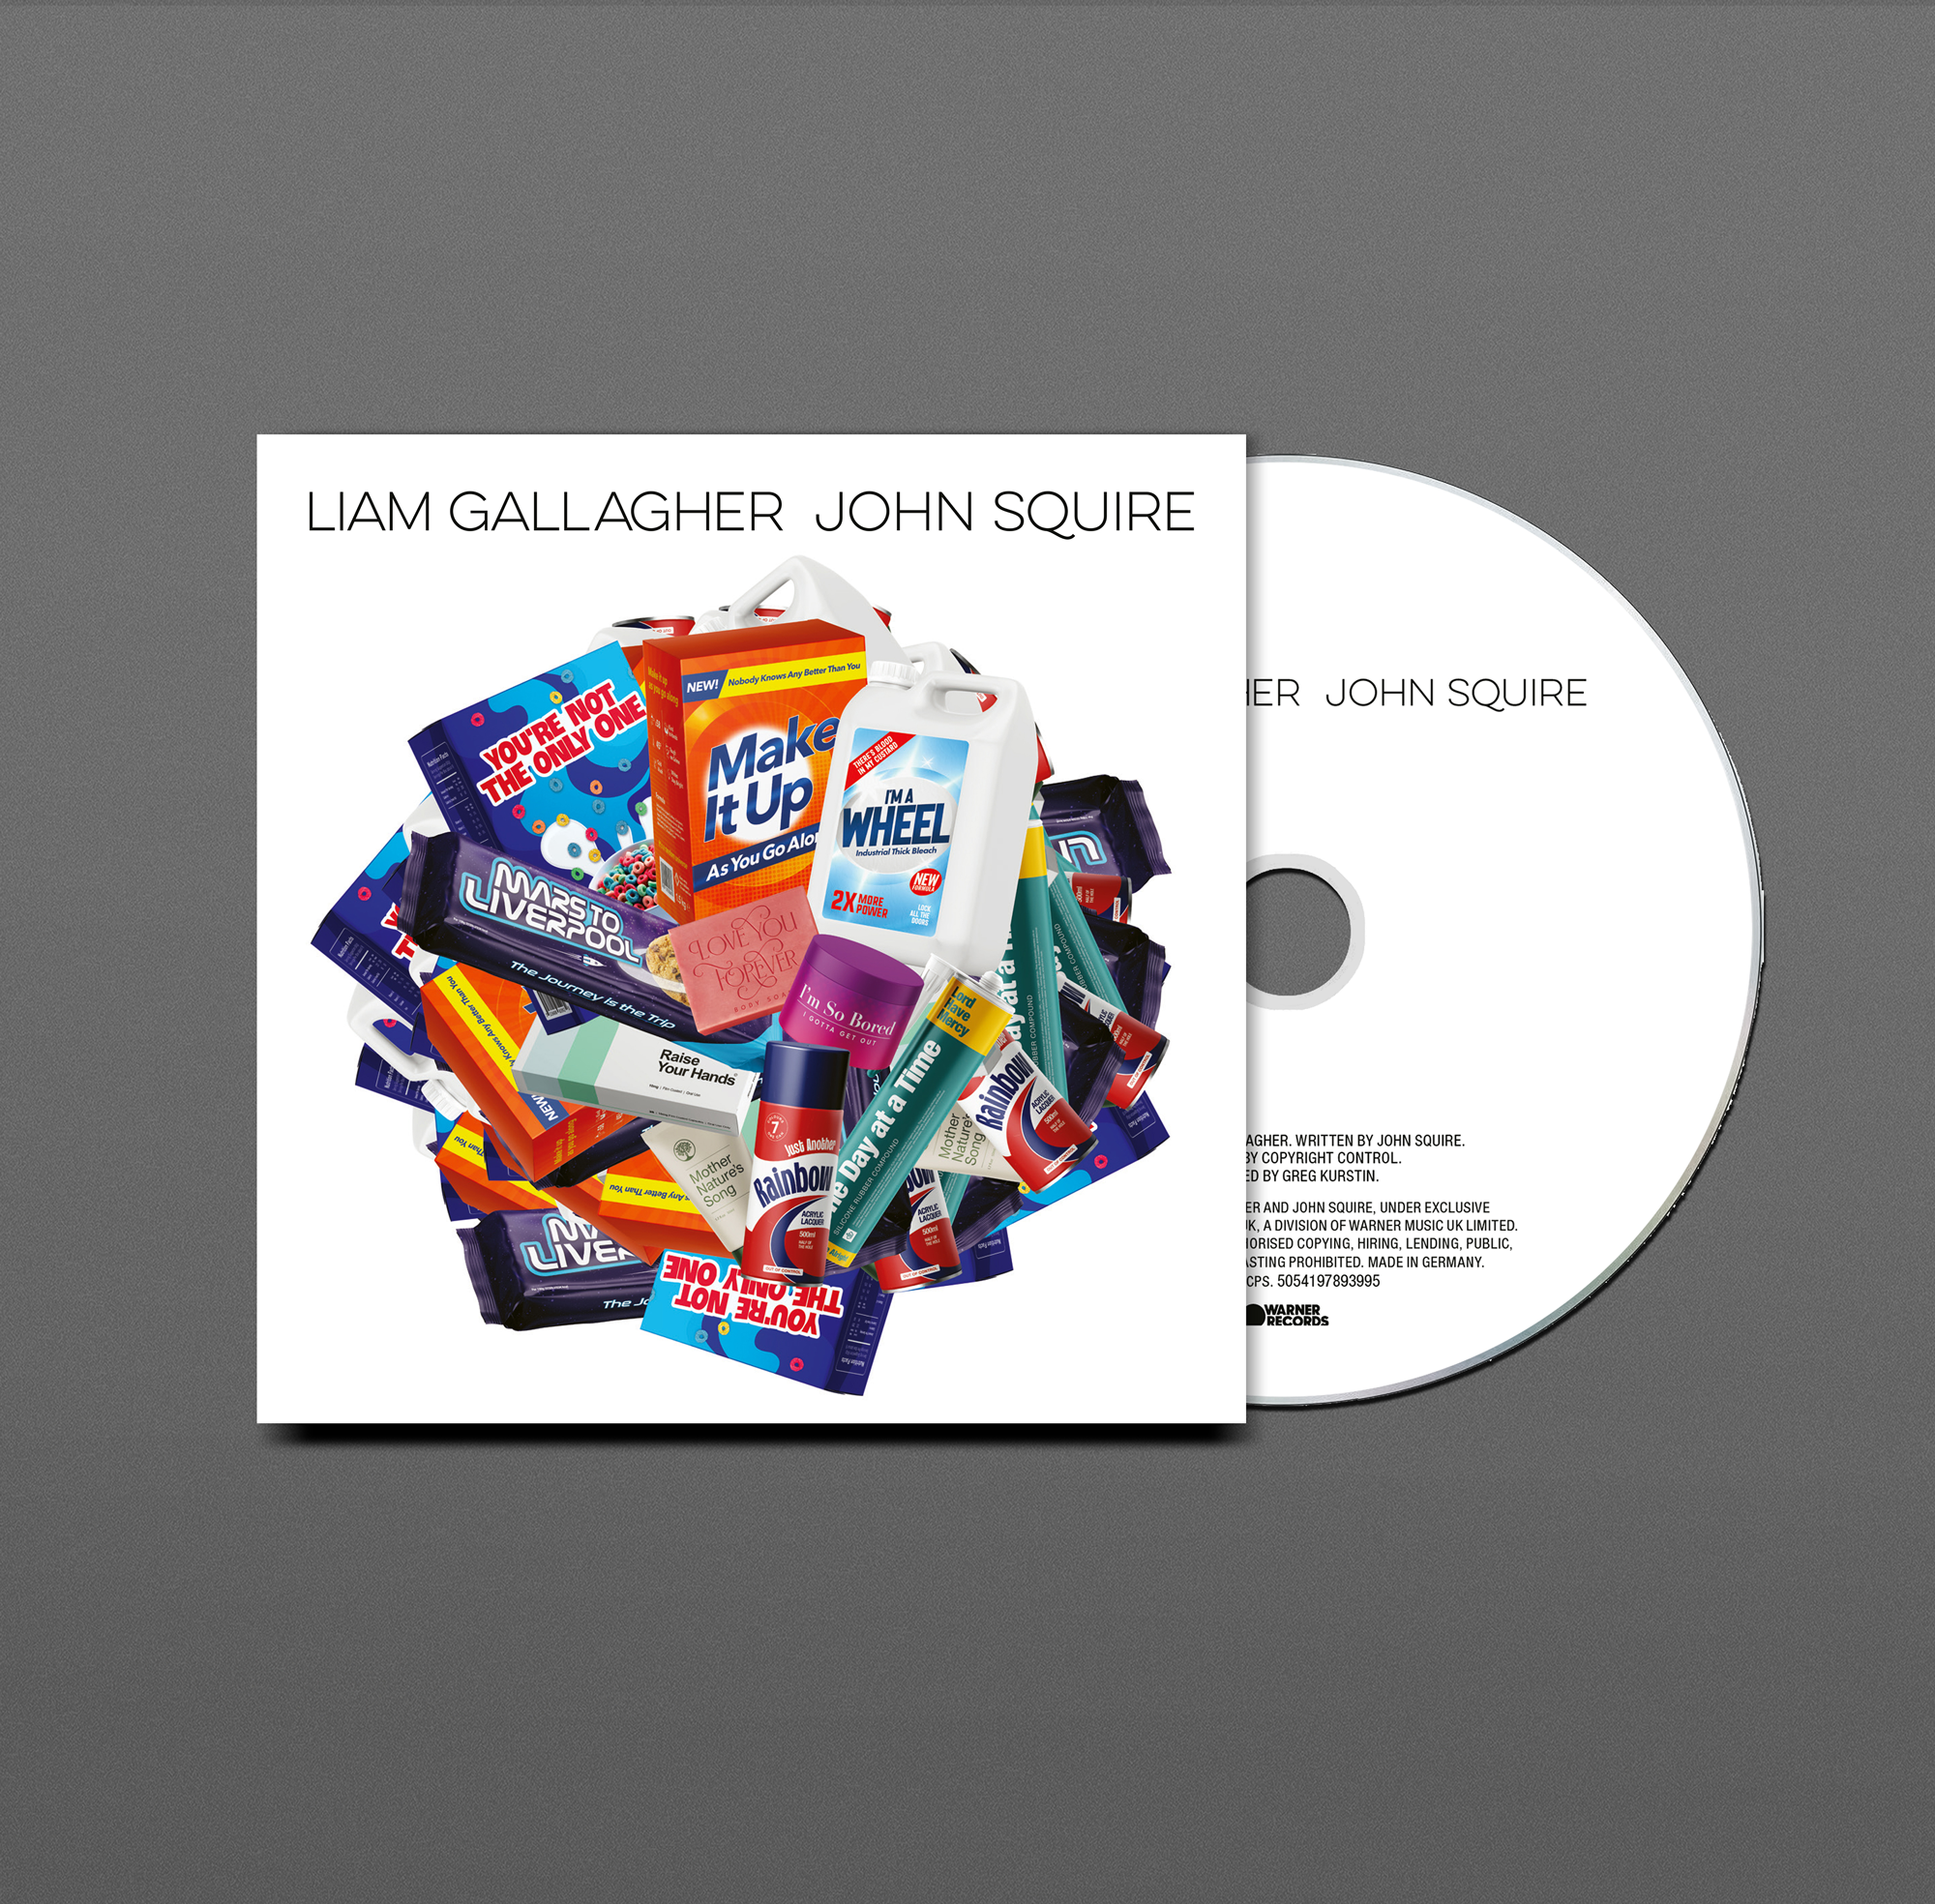 Liam Gallagher, John Squire - Liam Gallagher John Squire: CD